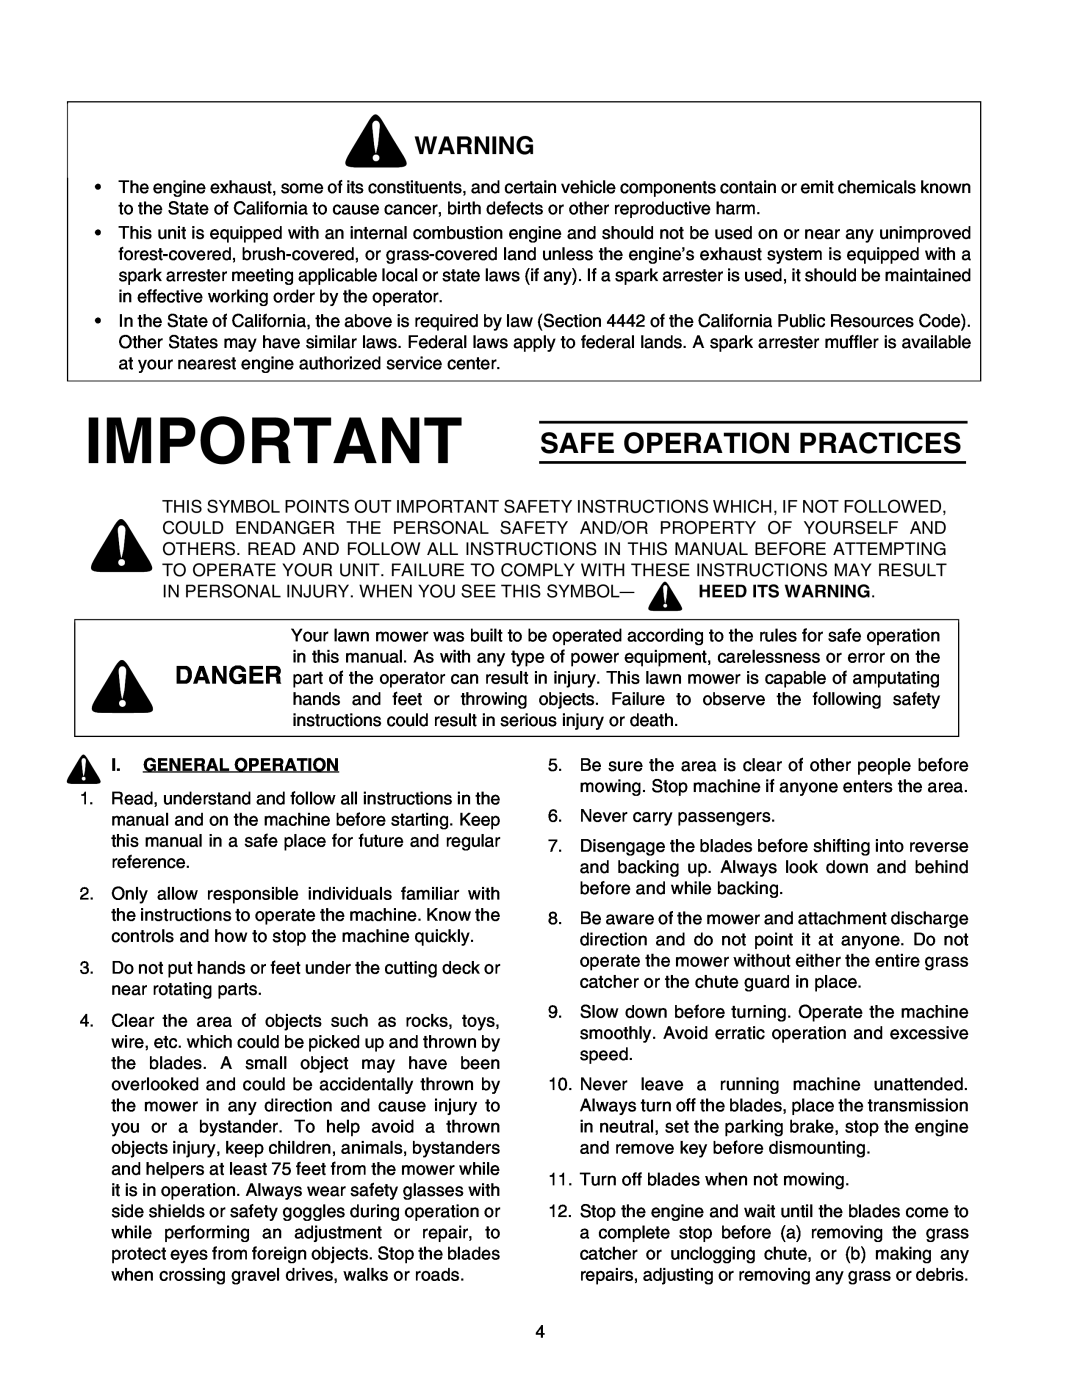 Troy-Bilt RZT 50 manual Safe Operation Practices, I. General Operation 